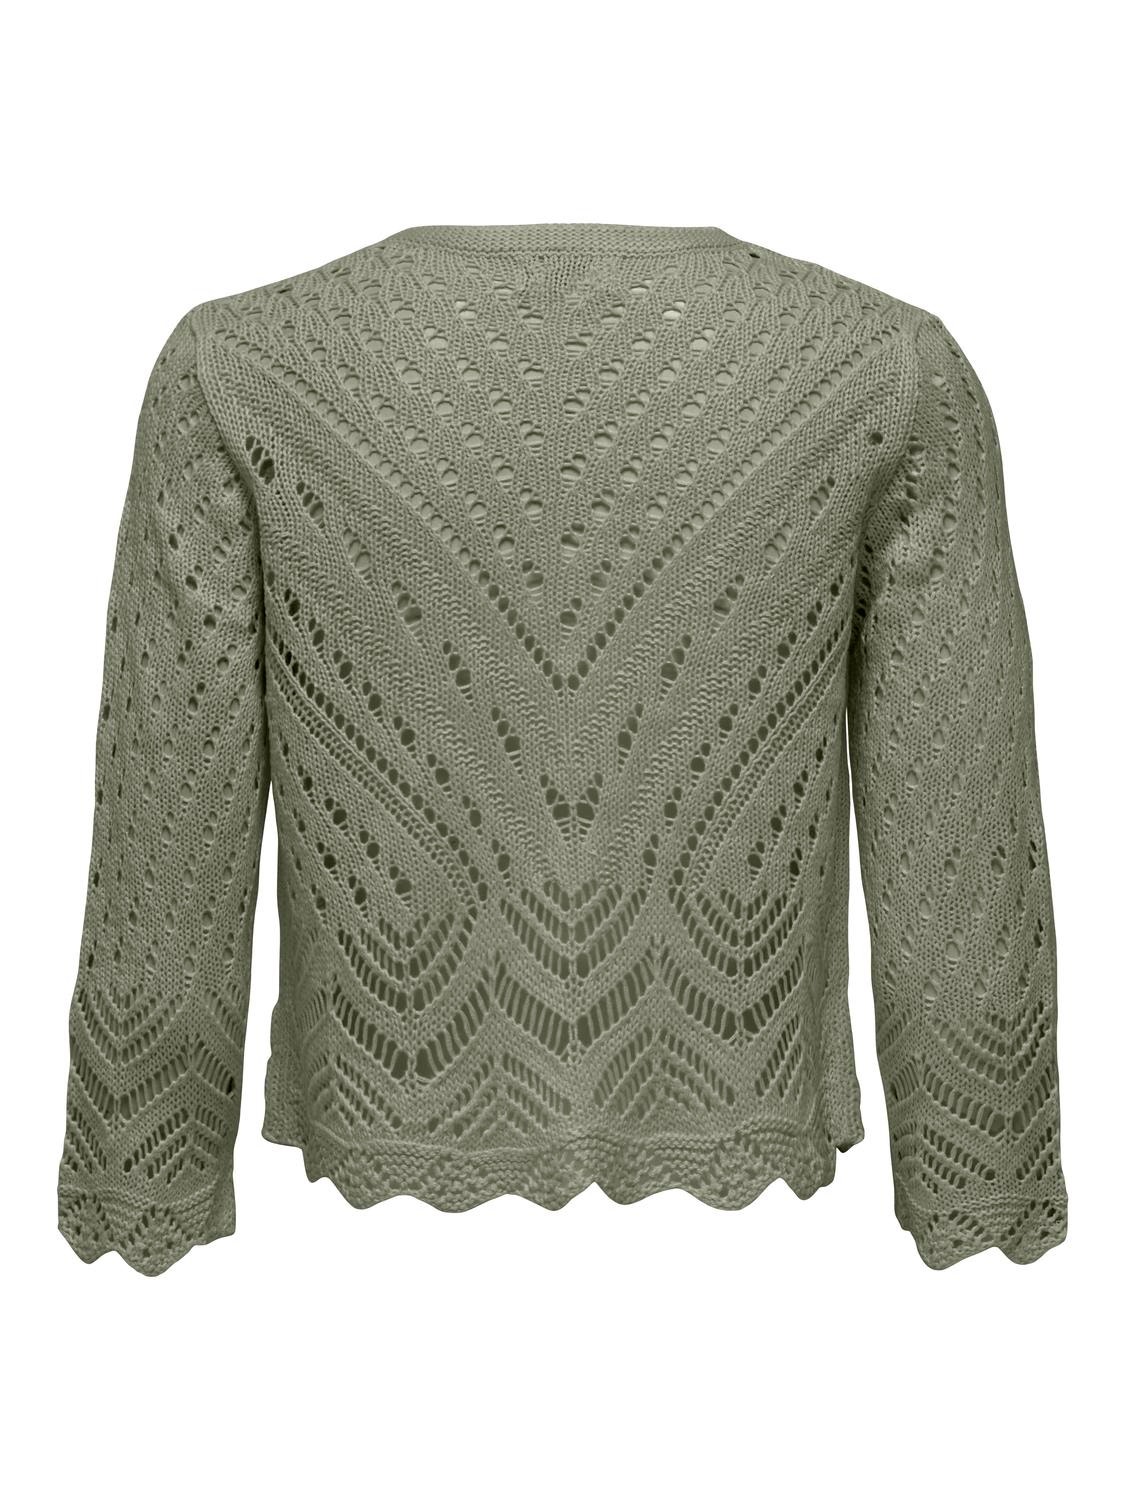 ONLY V-Neck Knit Cardigan -Deep Lichen Green - 15184486